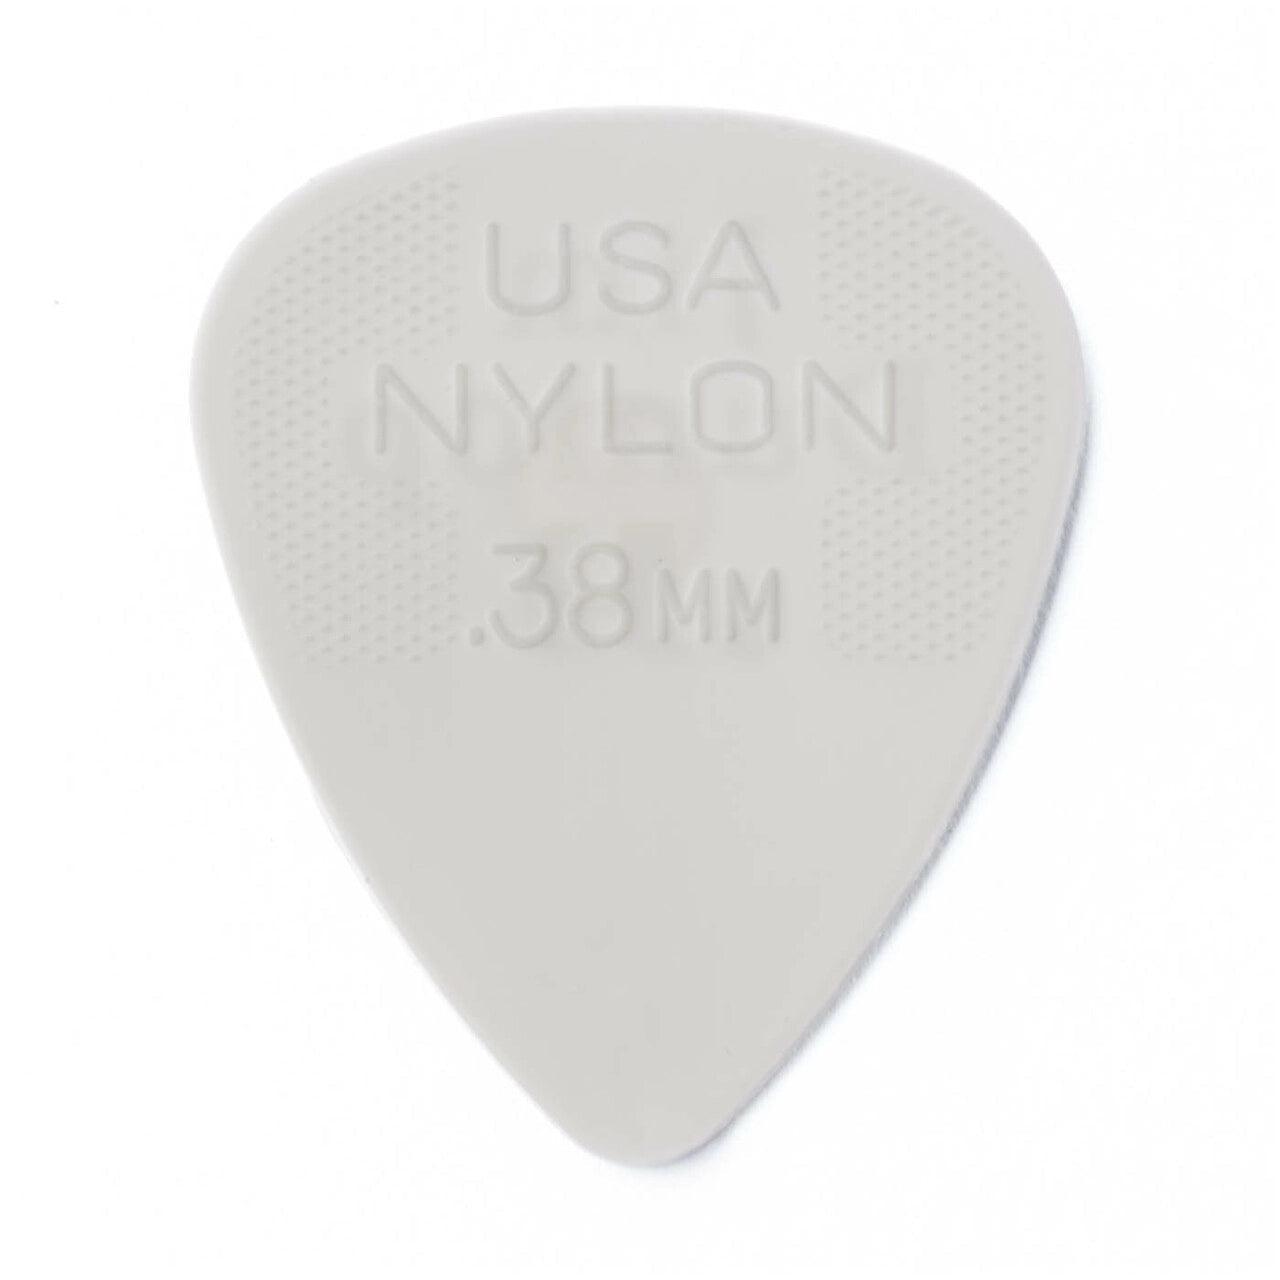 0.38mm Pick Nylon Grey - Guitars - Picks by Jim Dunlop at Muso's Stuff